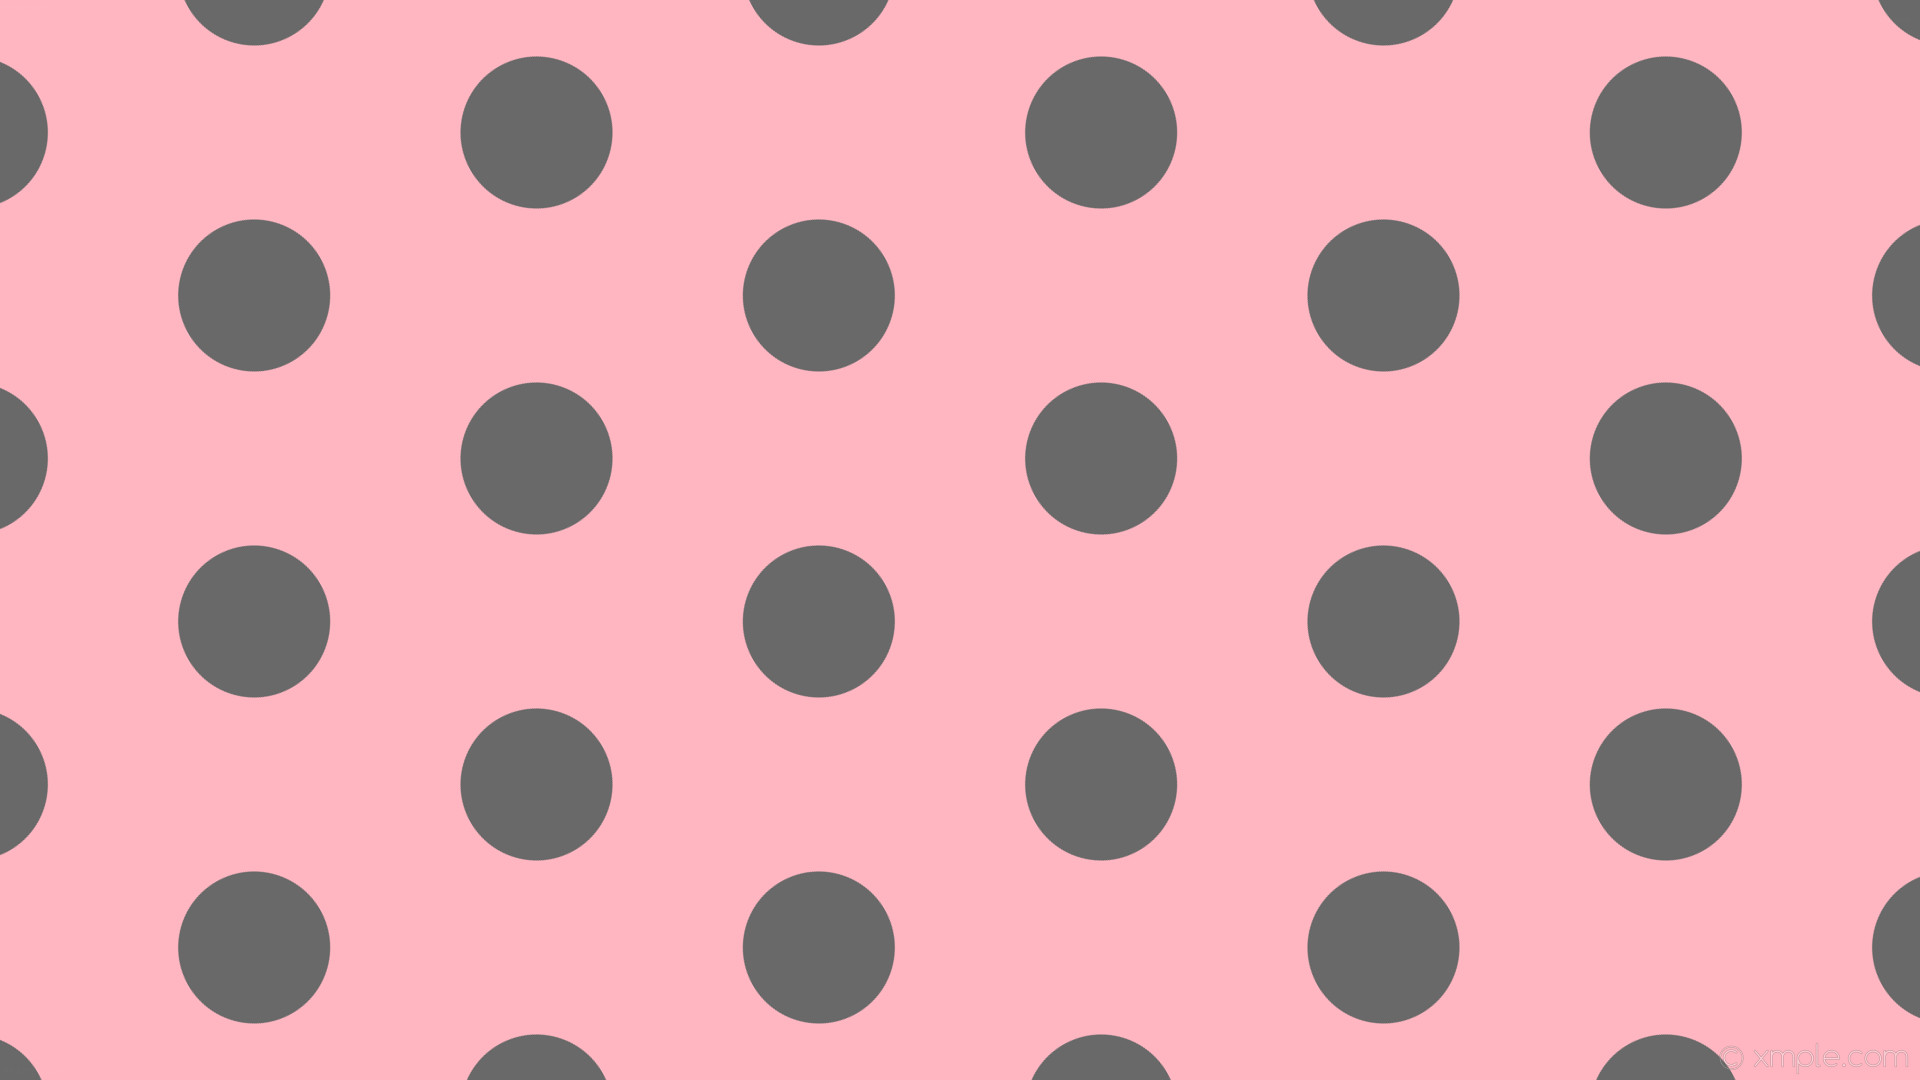 1920x1080 wallpaper grey polka dots hexagon pink light pink dim gray #ffb6c1 #696969  diagonal 30